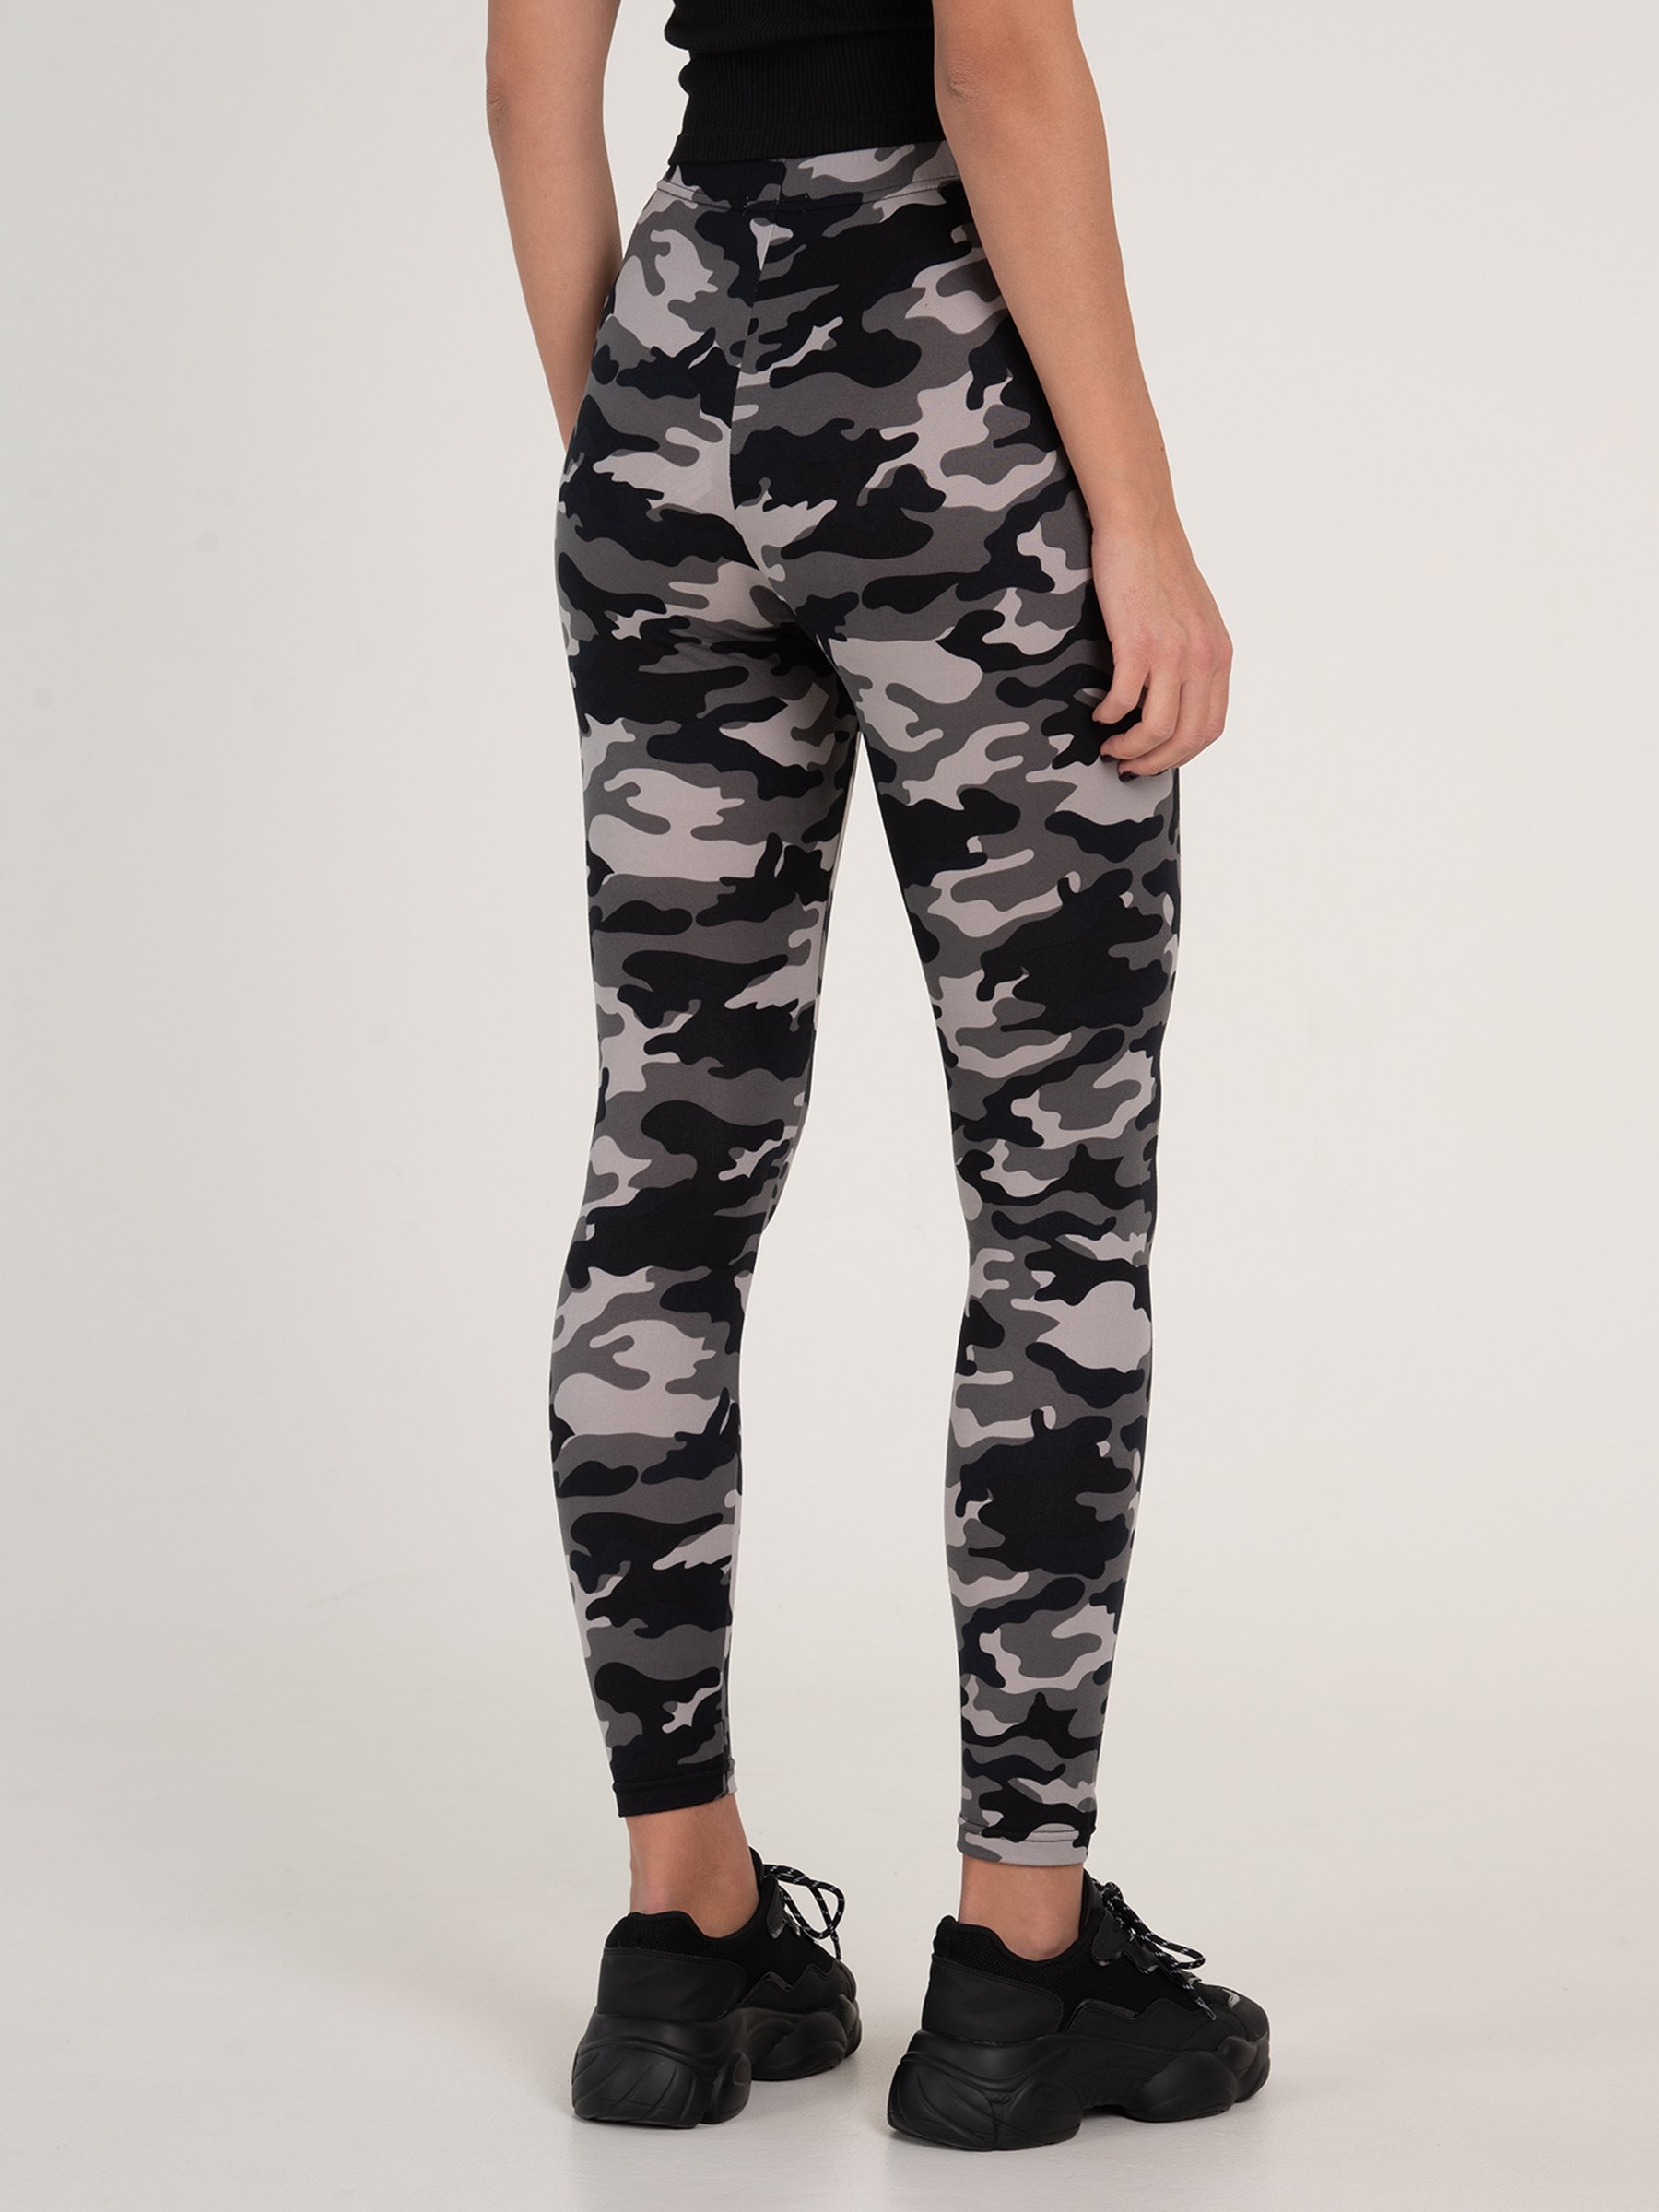 Camouflage pattern leggings,camo print leggings,camo pattern leggings 